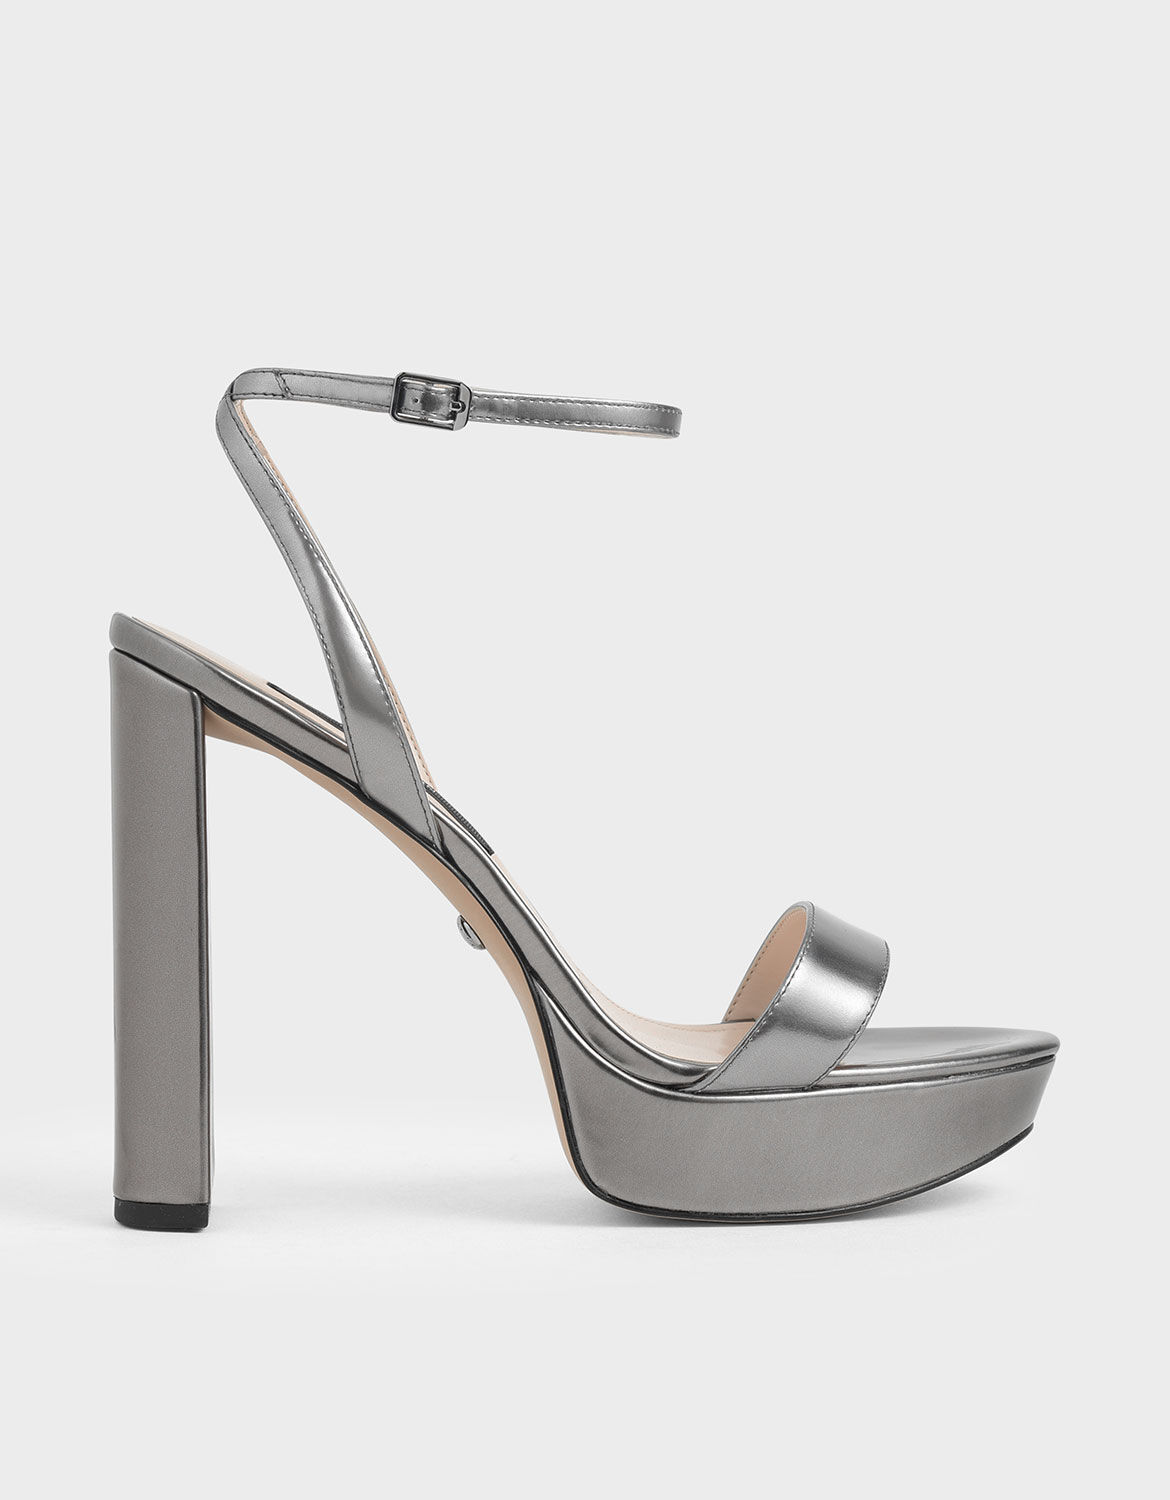 leather platform heels